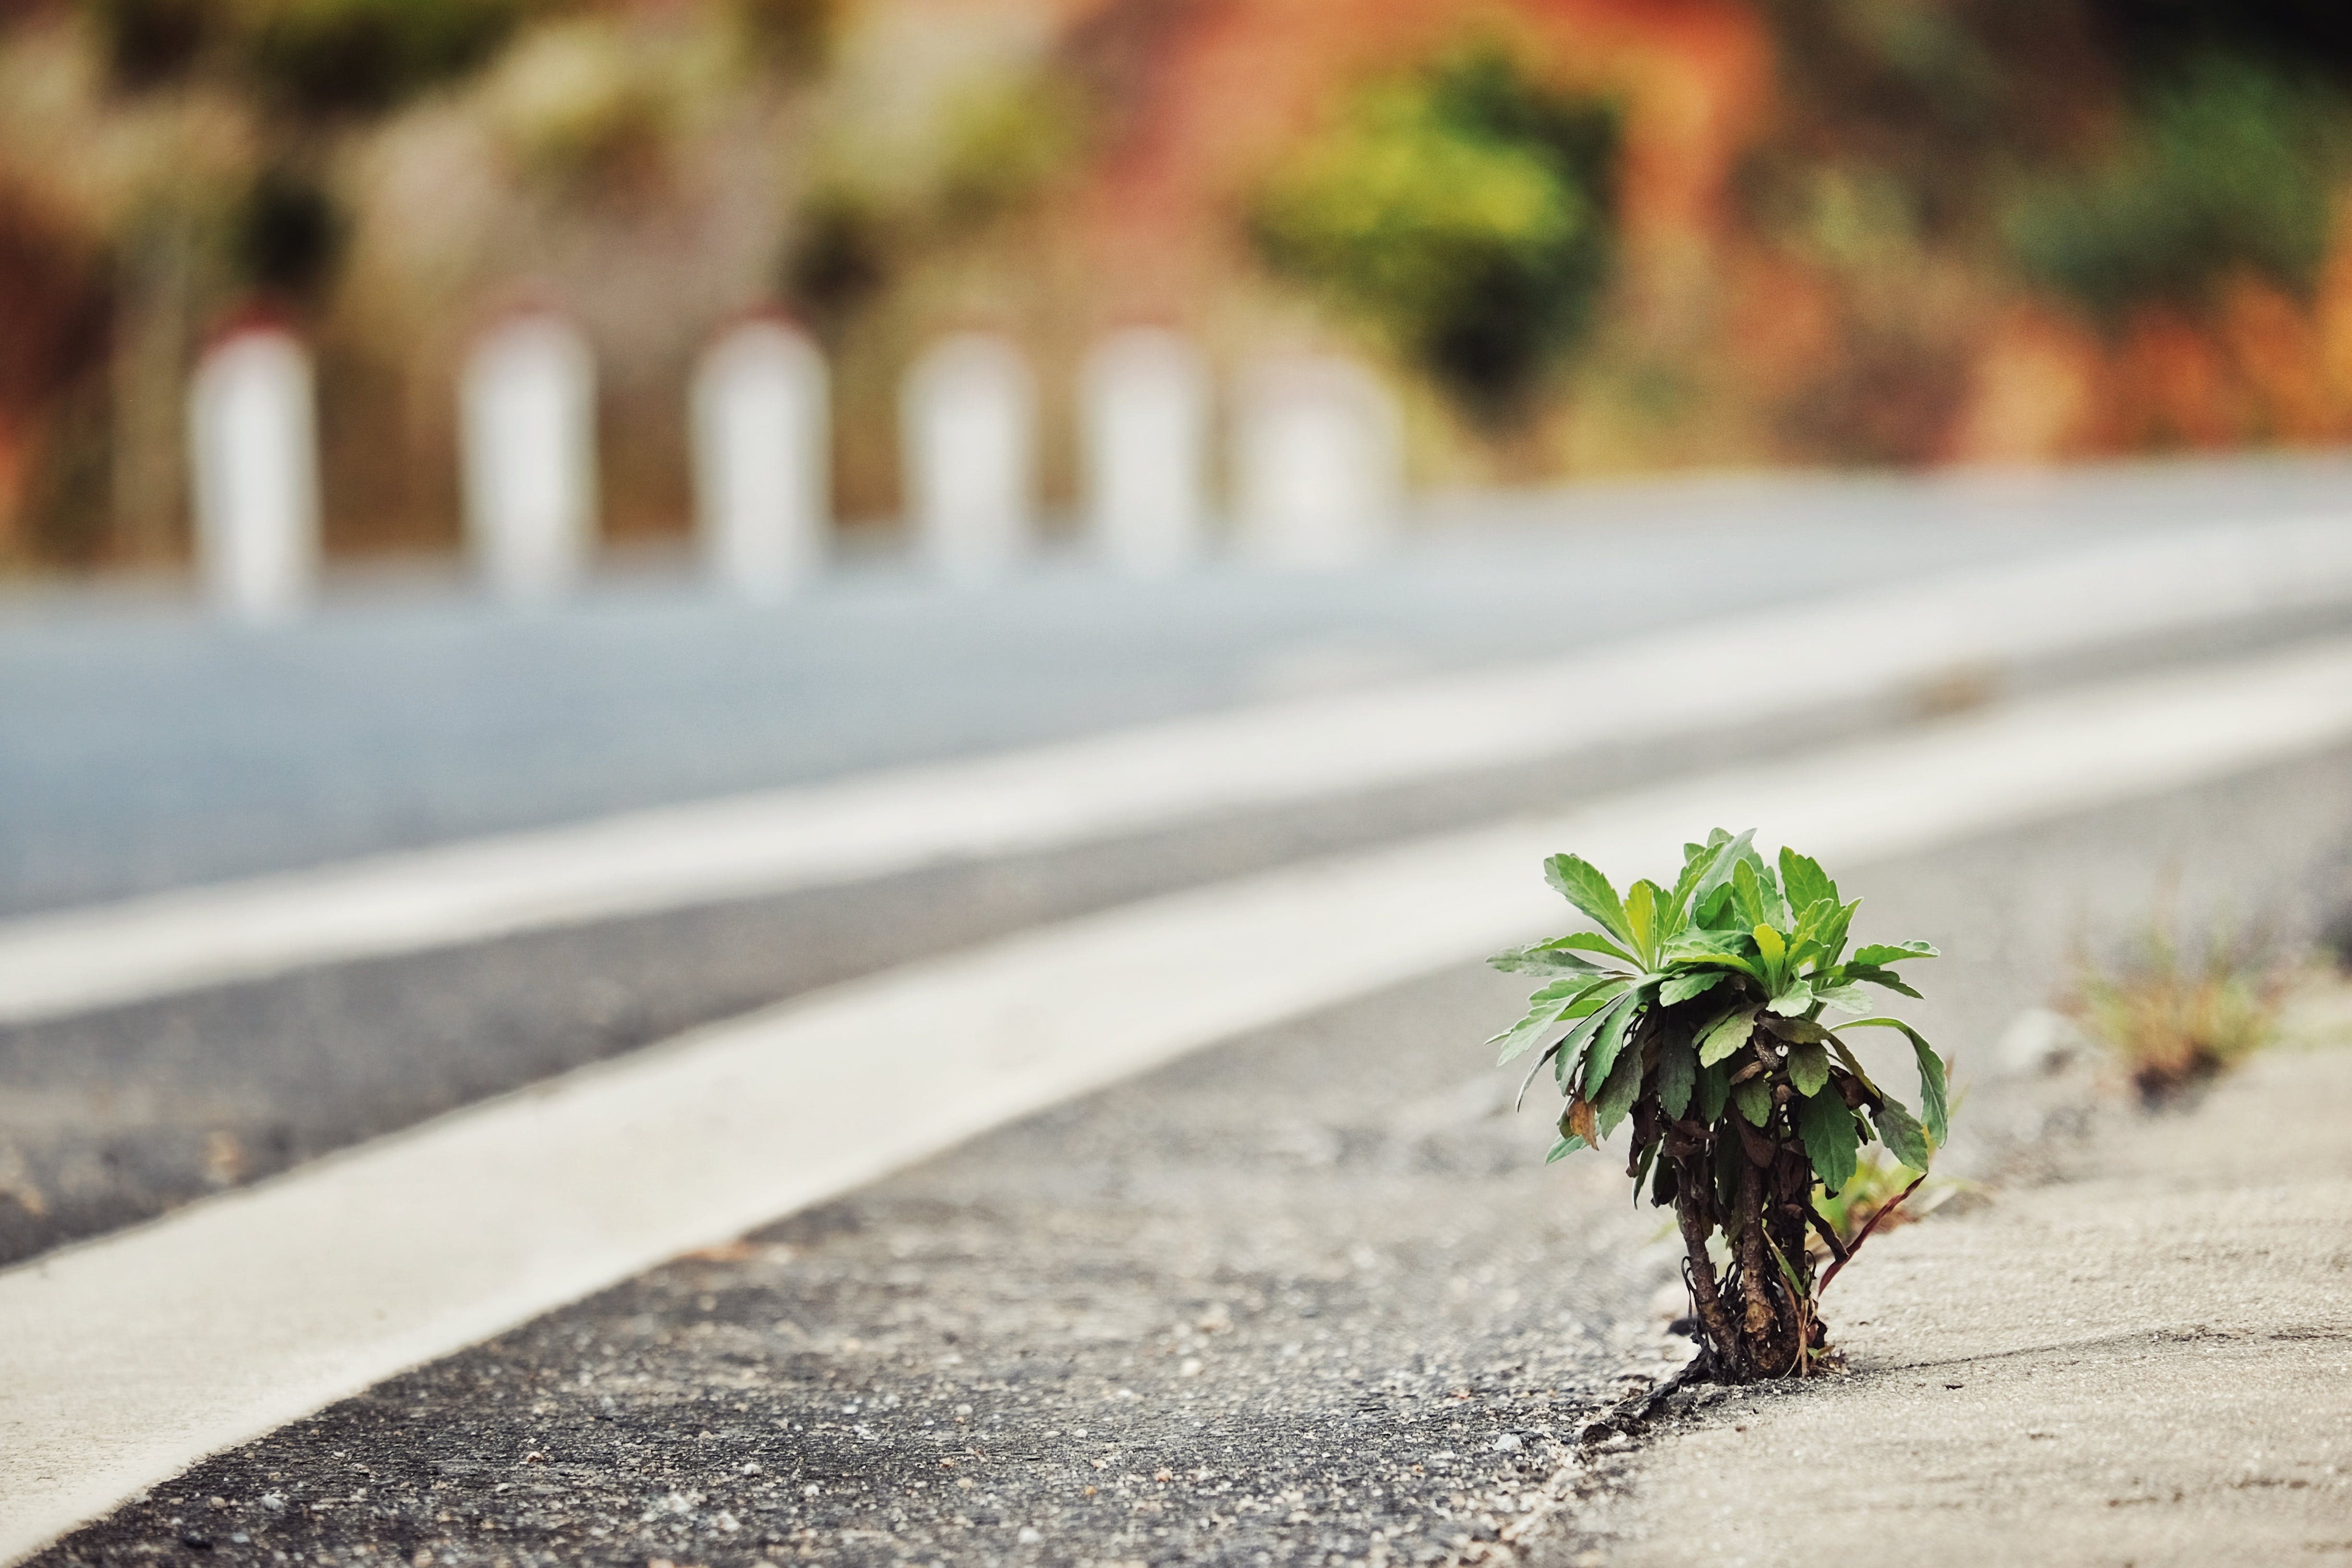 Plant growing through asphalt, representing extreme adaptation